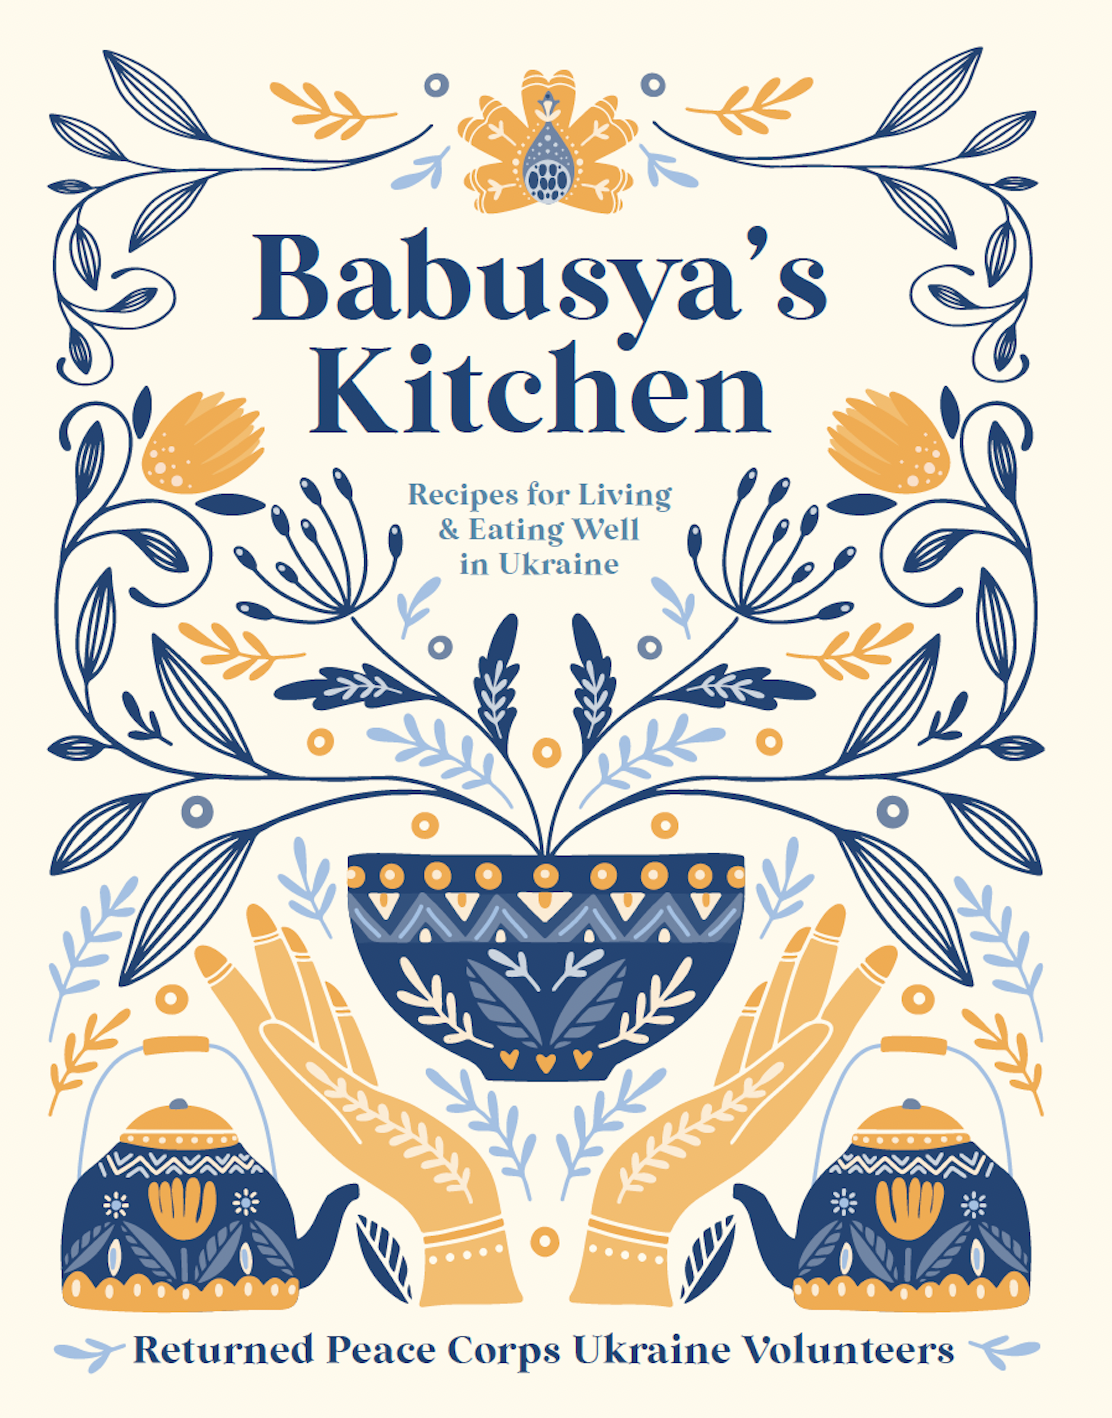 Babusya's Kitchen: Recipes for Living & Eating Well in Ukraine (Returned Peace Corps Ukraine Volunteers)